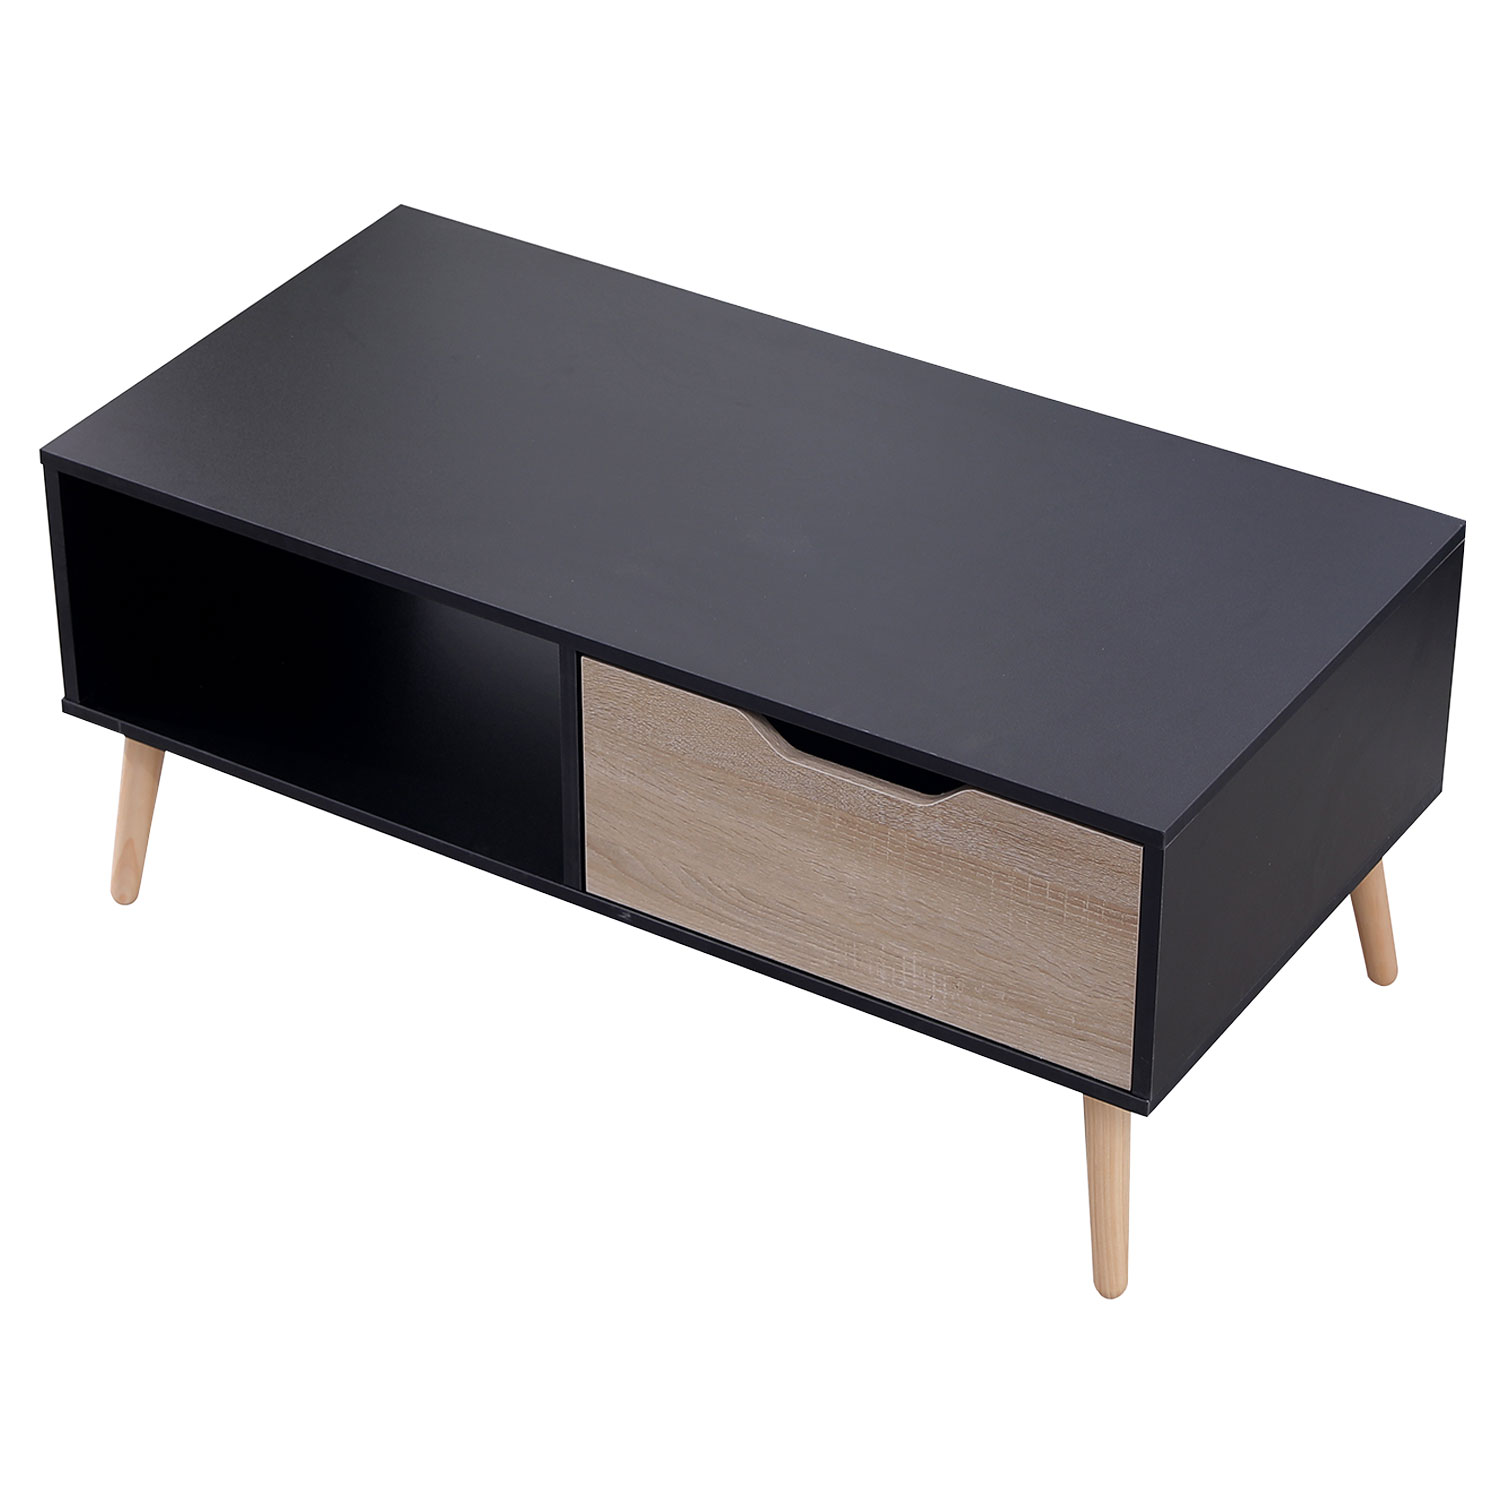 Table basse style scandinave noire avec tiroir